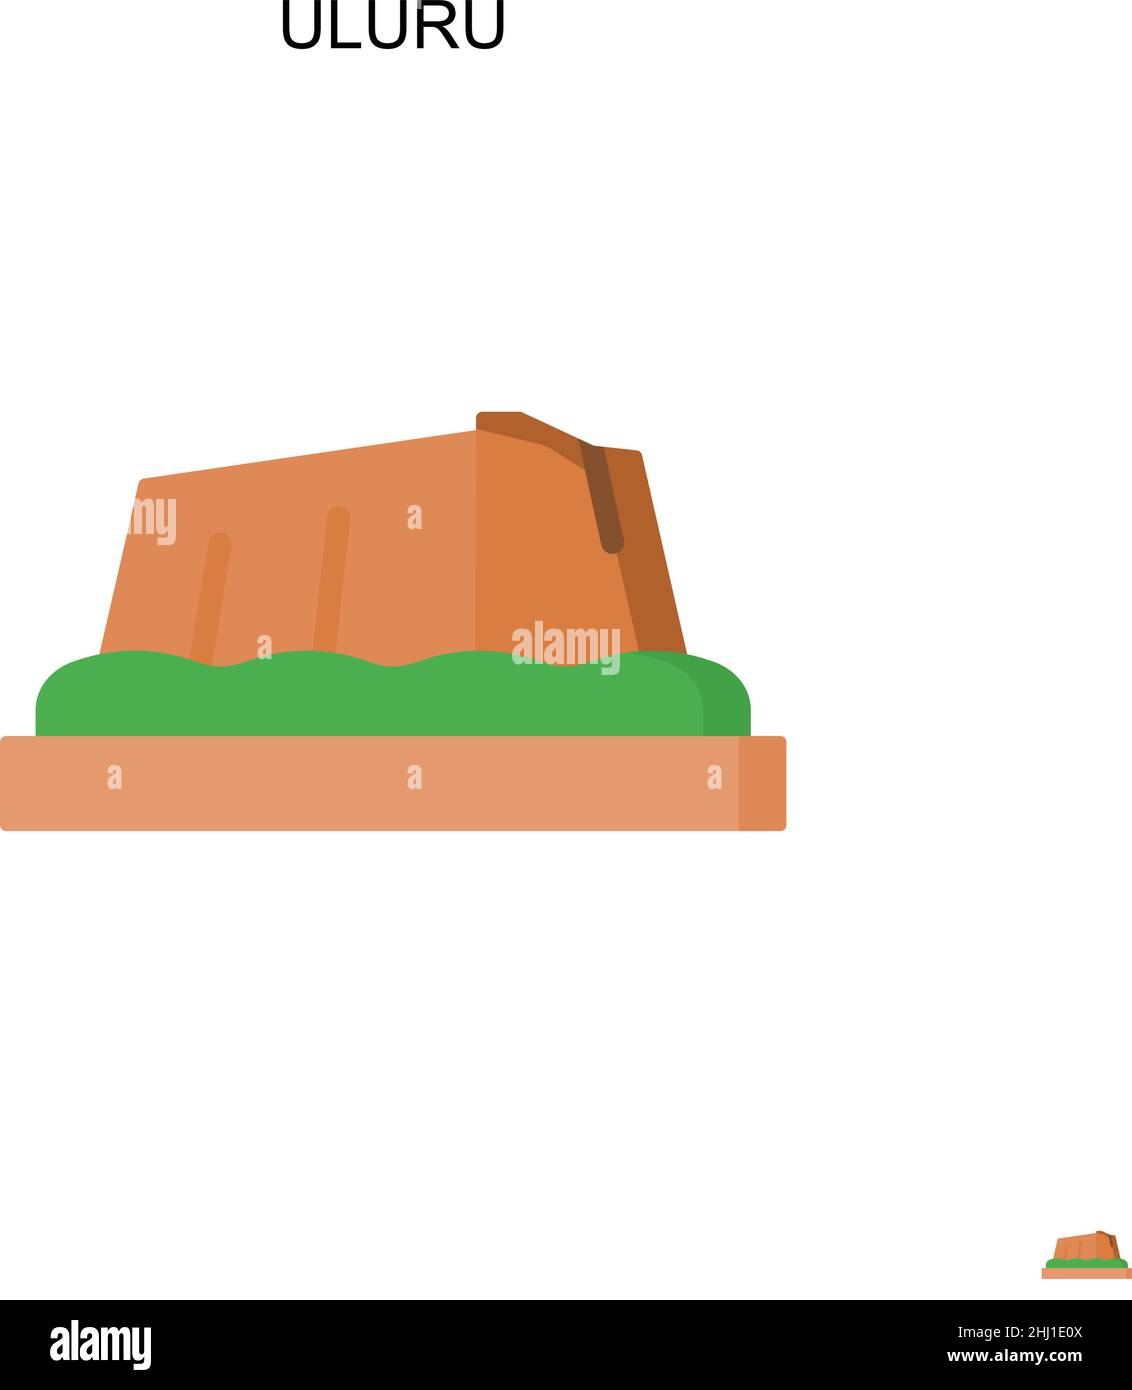 Einfaches Vektorsymbol Uluru. Illustration Symbol Design-Vorlage für Web mobile UI-Element. Stock Vektor